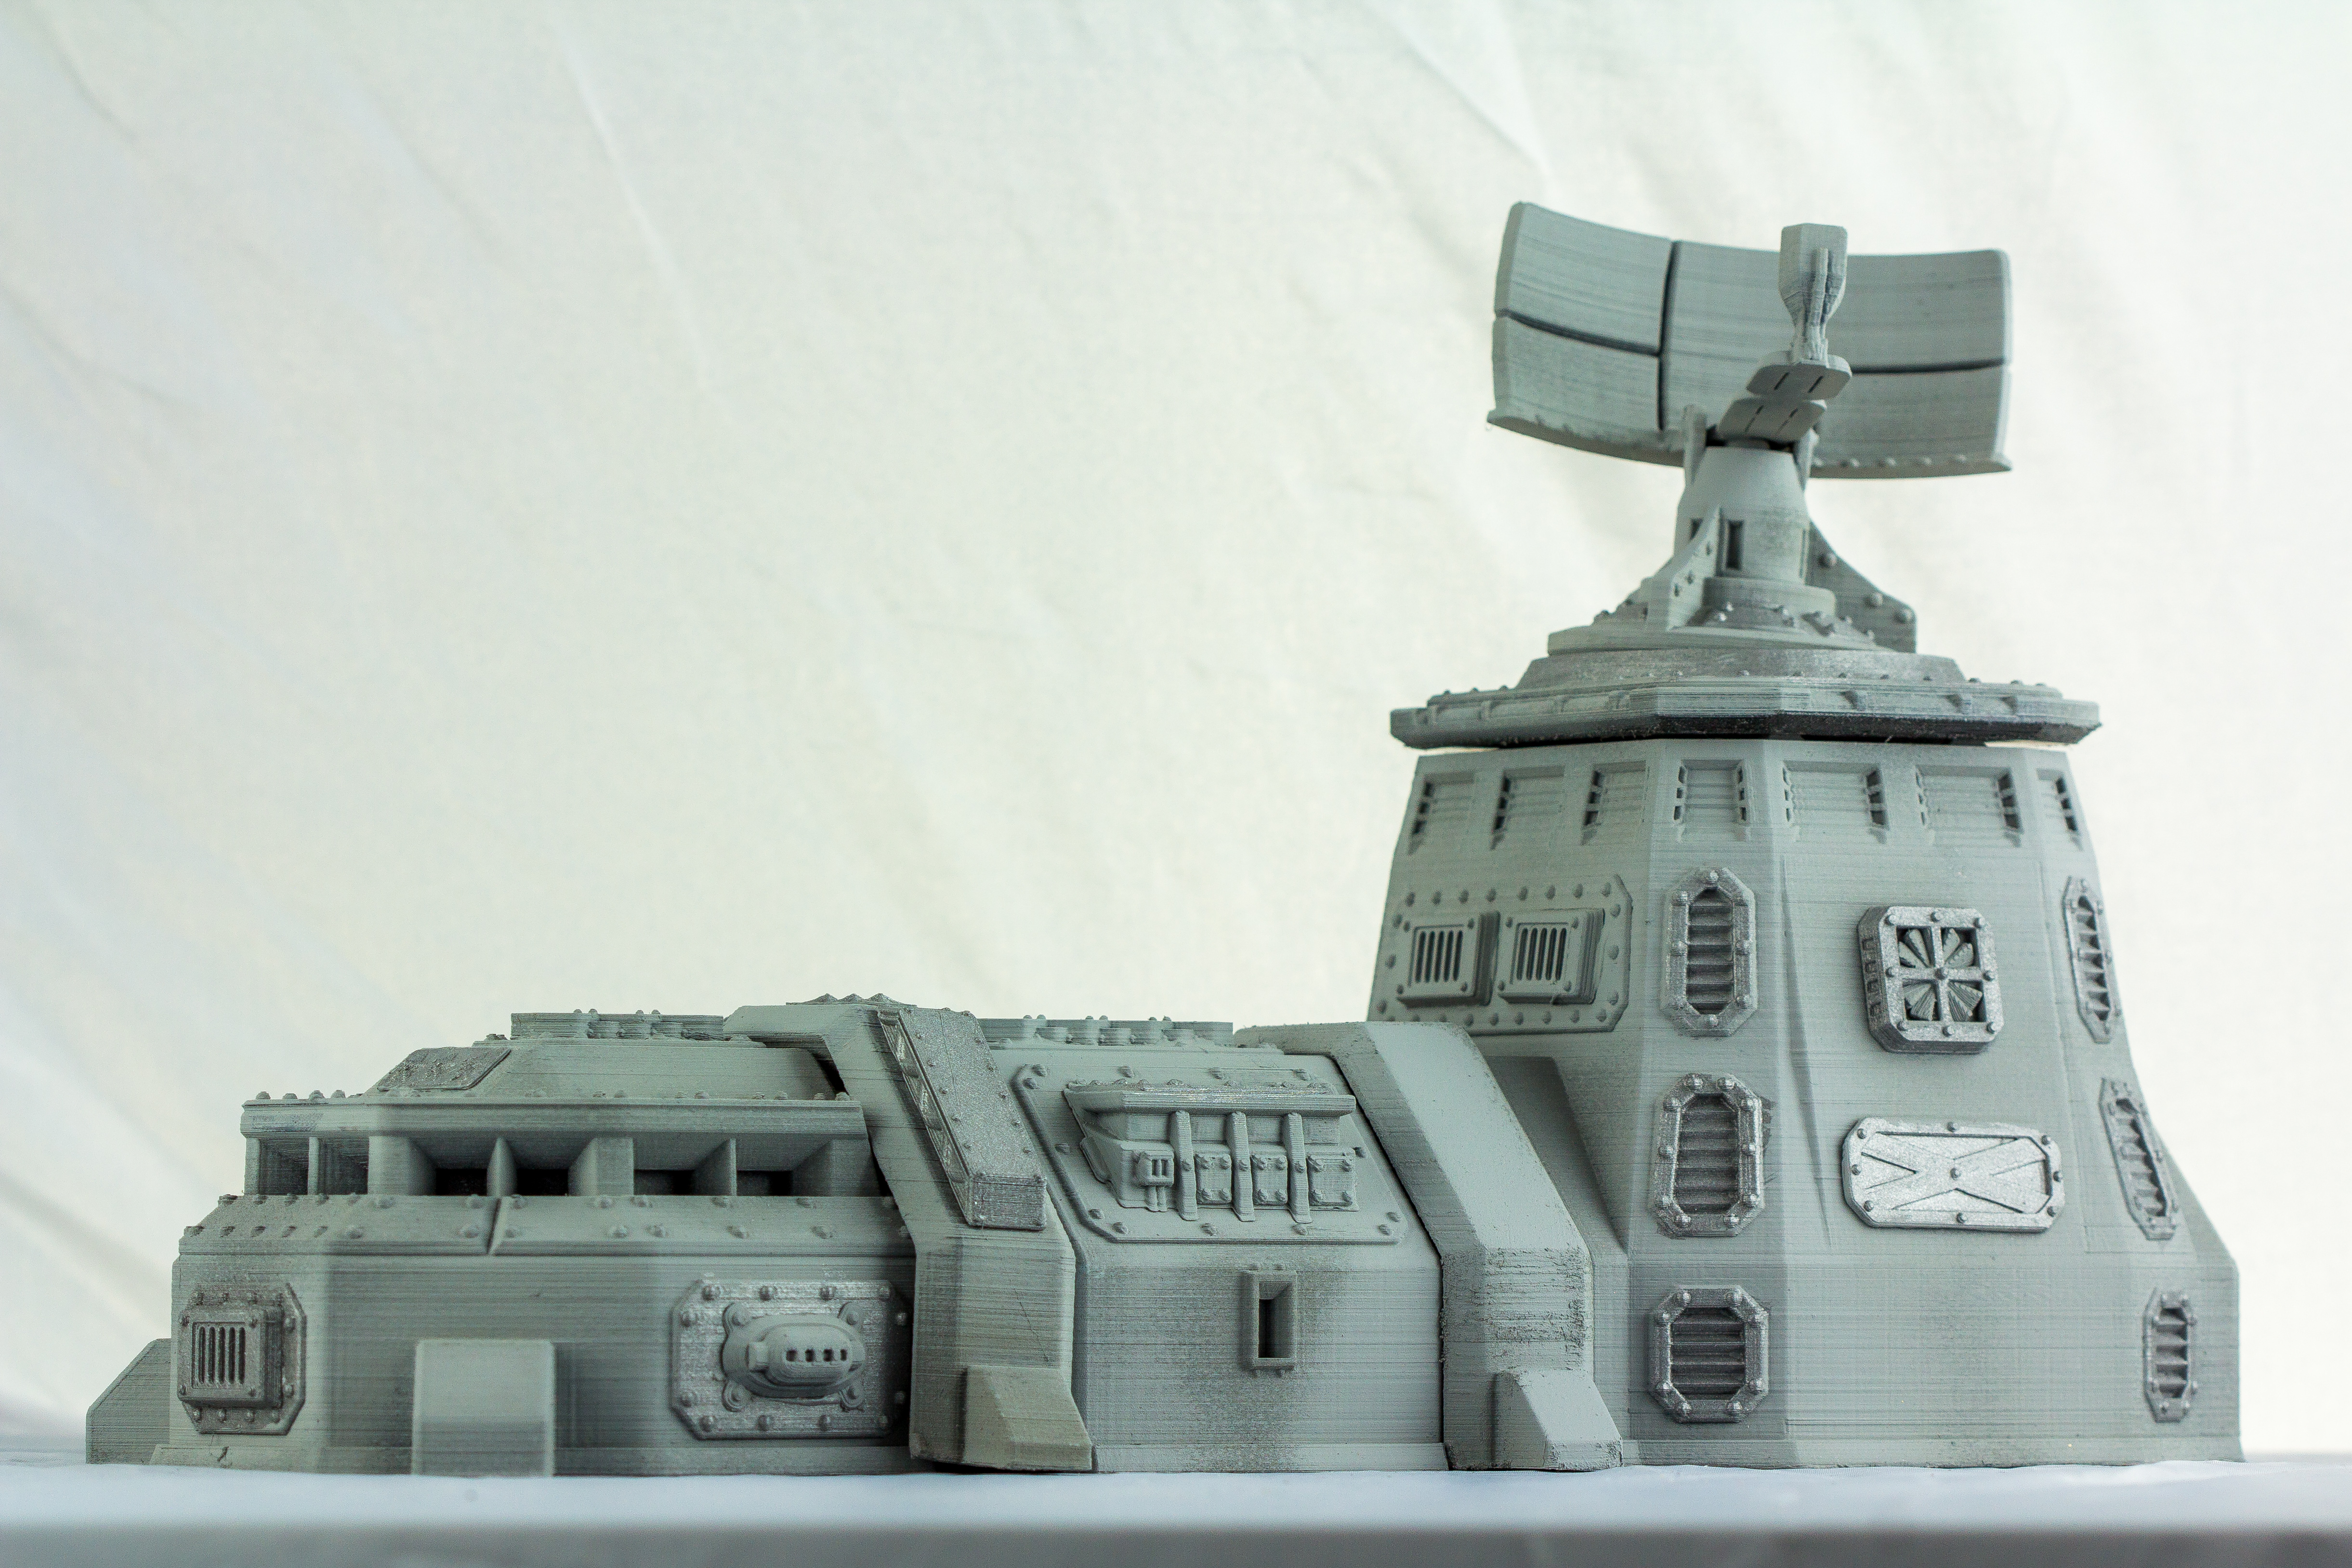 Terrain 4 Print: Sci-Fi armored barracks and Tower